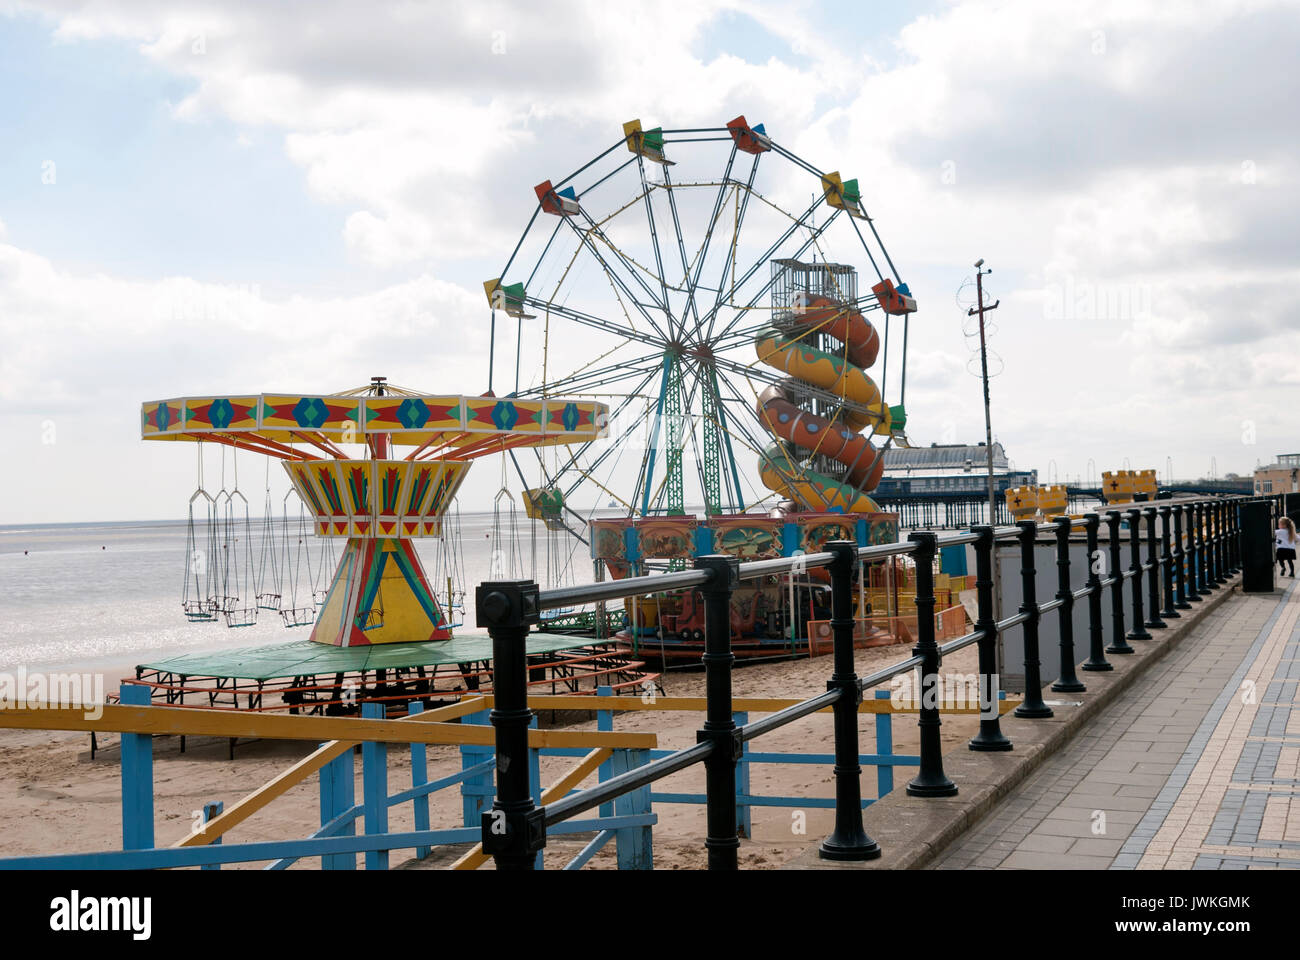 Seaside, Carnival, Fair, Amusement Rides on the Beach, Ferris Wheel, Slide, Swing Ride, Empty, Derelict, Railings, England, Cleethorpes, Sand, Pathway Stock Photo